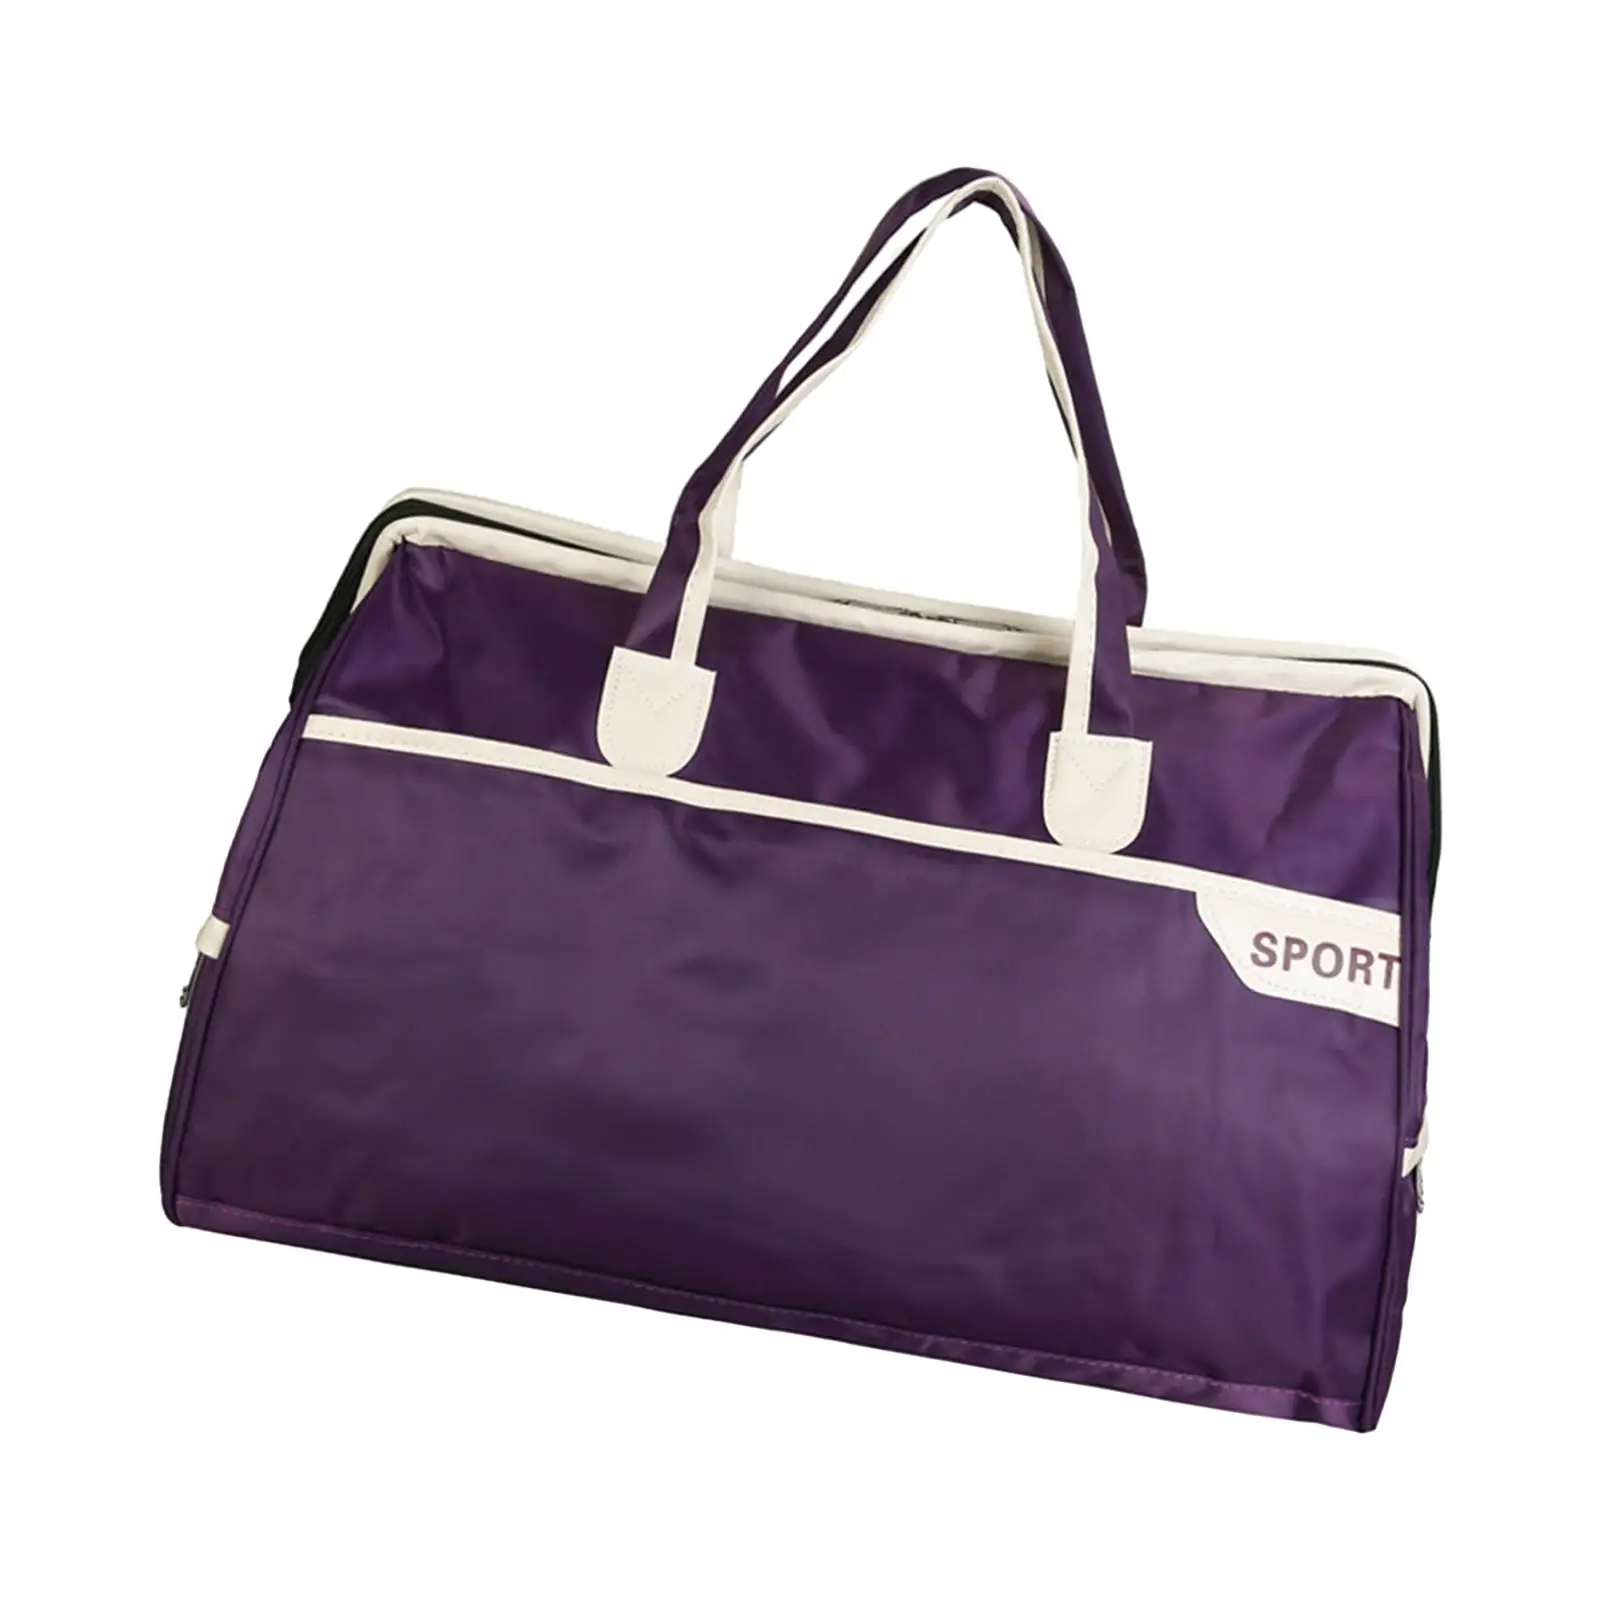 Travel Duffel Tote Bag Sports Gym Bag Pouch Lightweight Folding Overnight Bag Handbag for Trip Backpacking Overnight Outddor